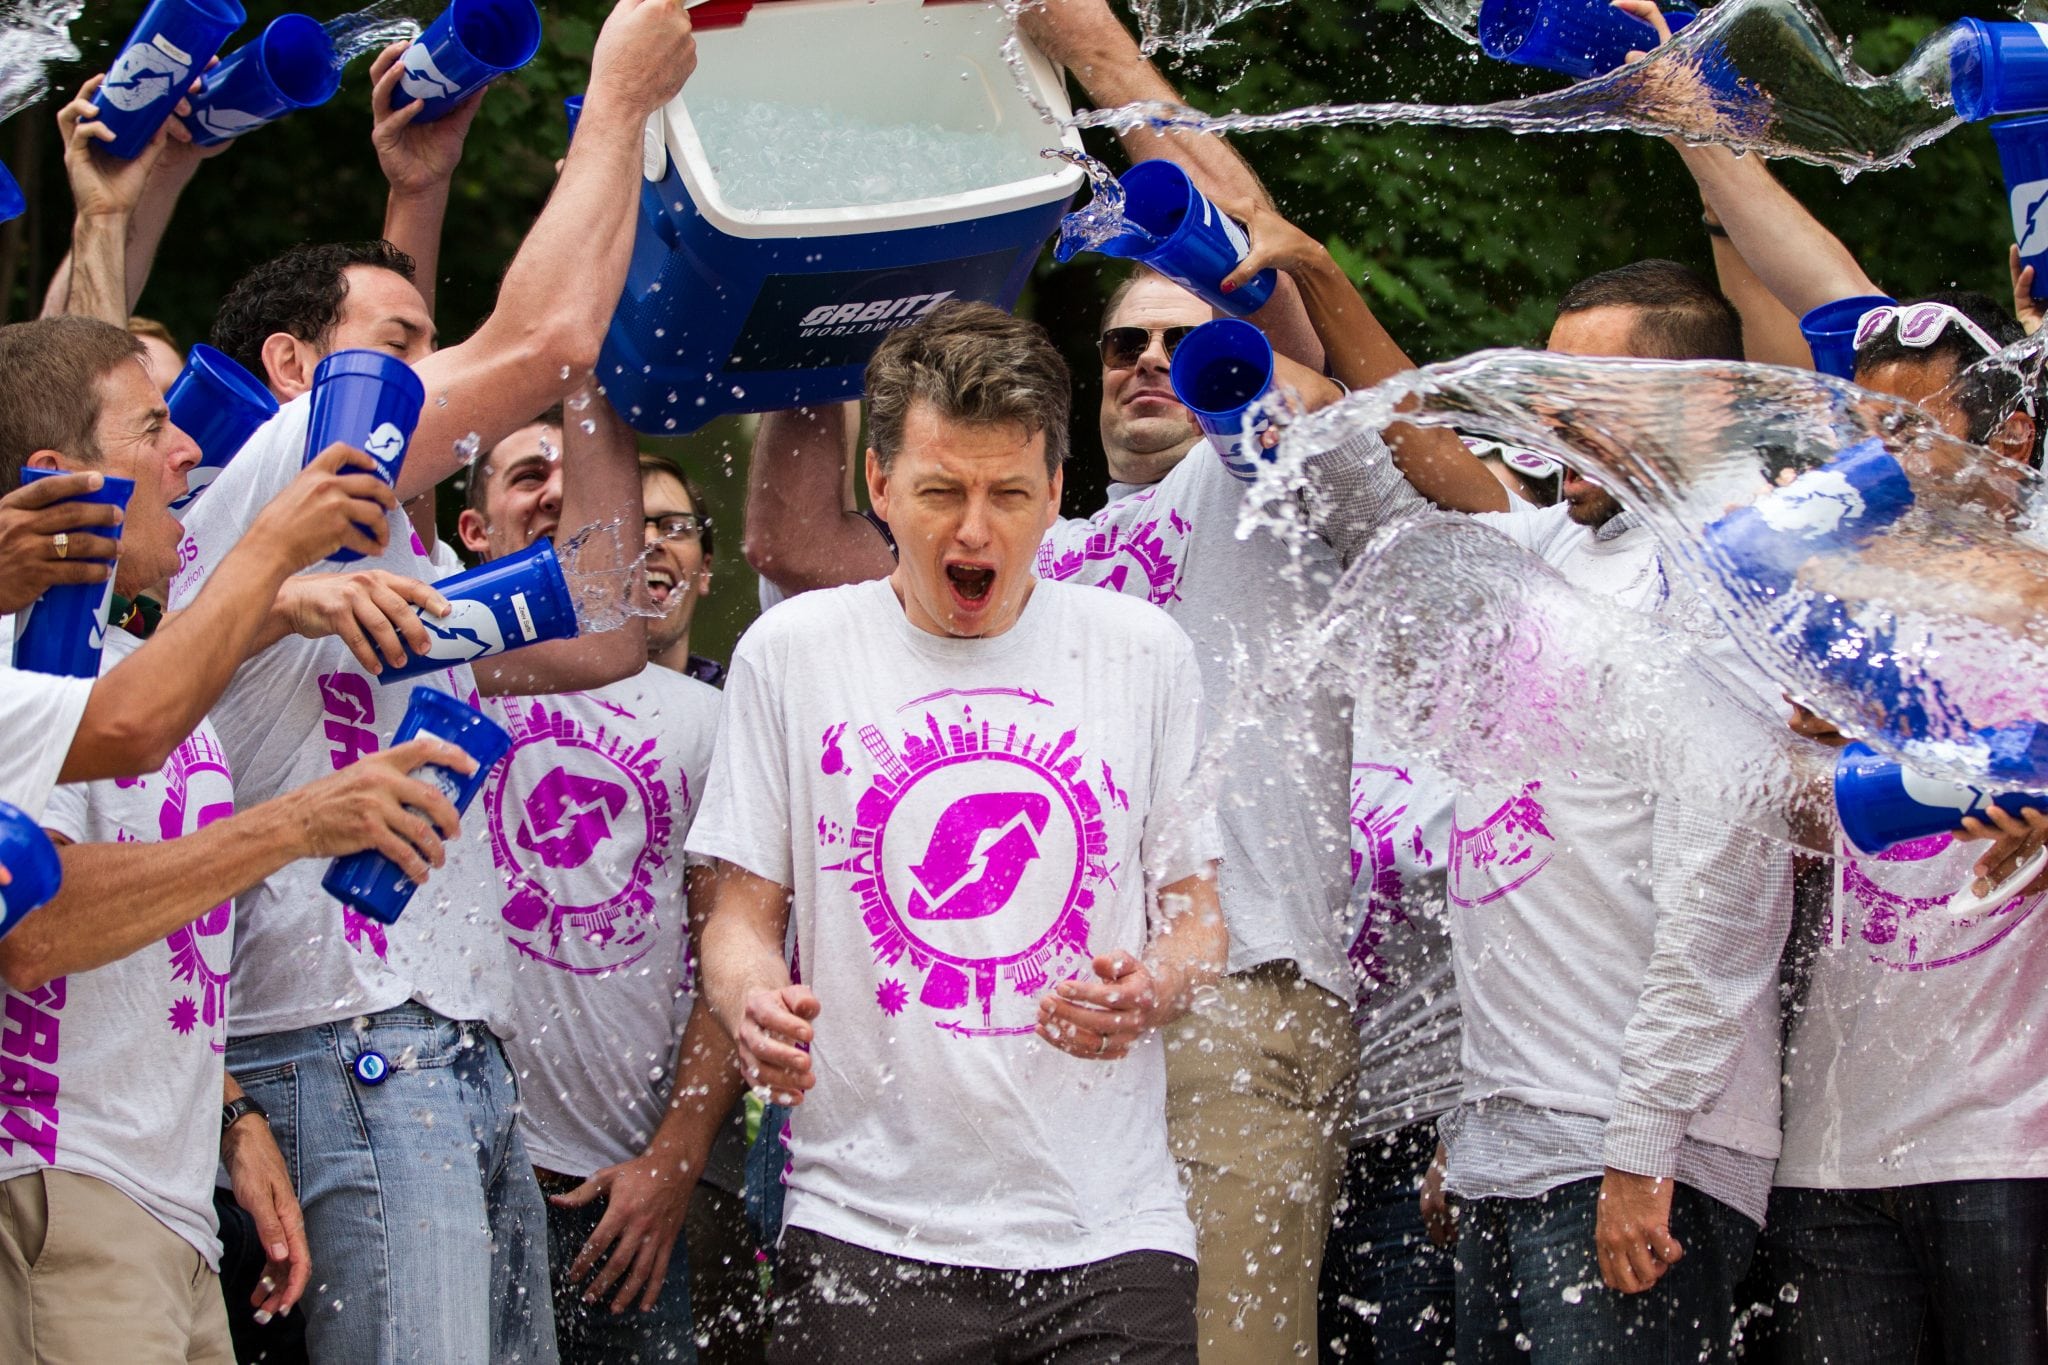 Orbitz CEO Barney Harford takes the ALS Ice Bucket Challenge.